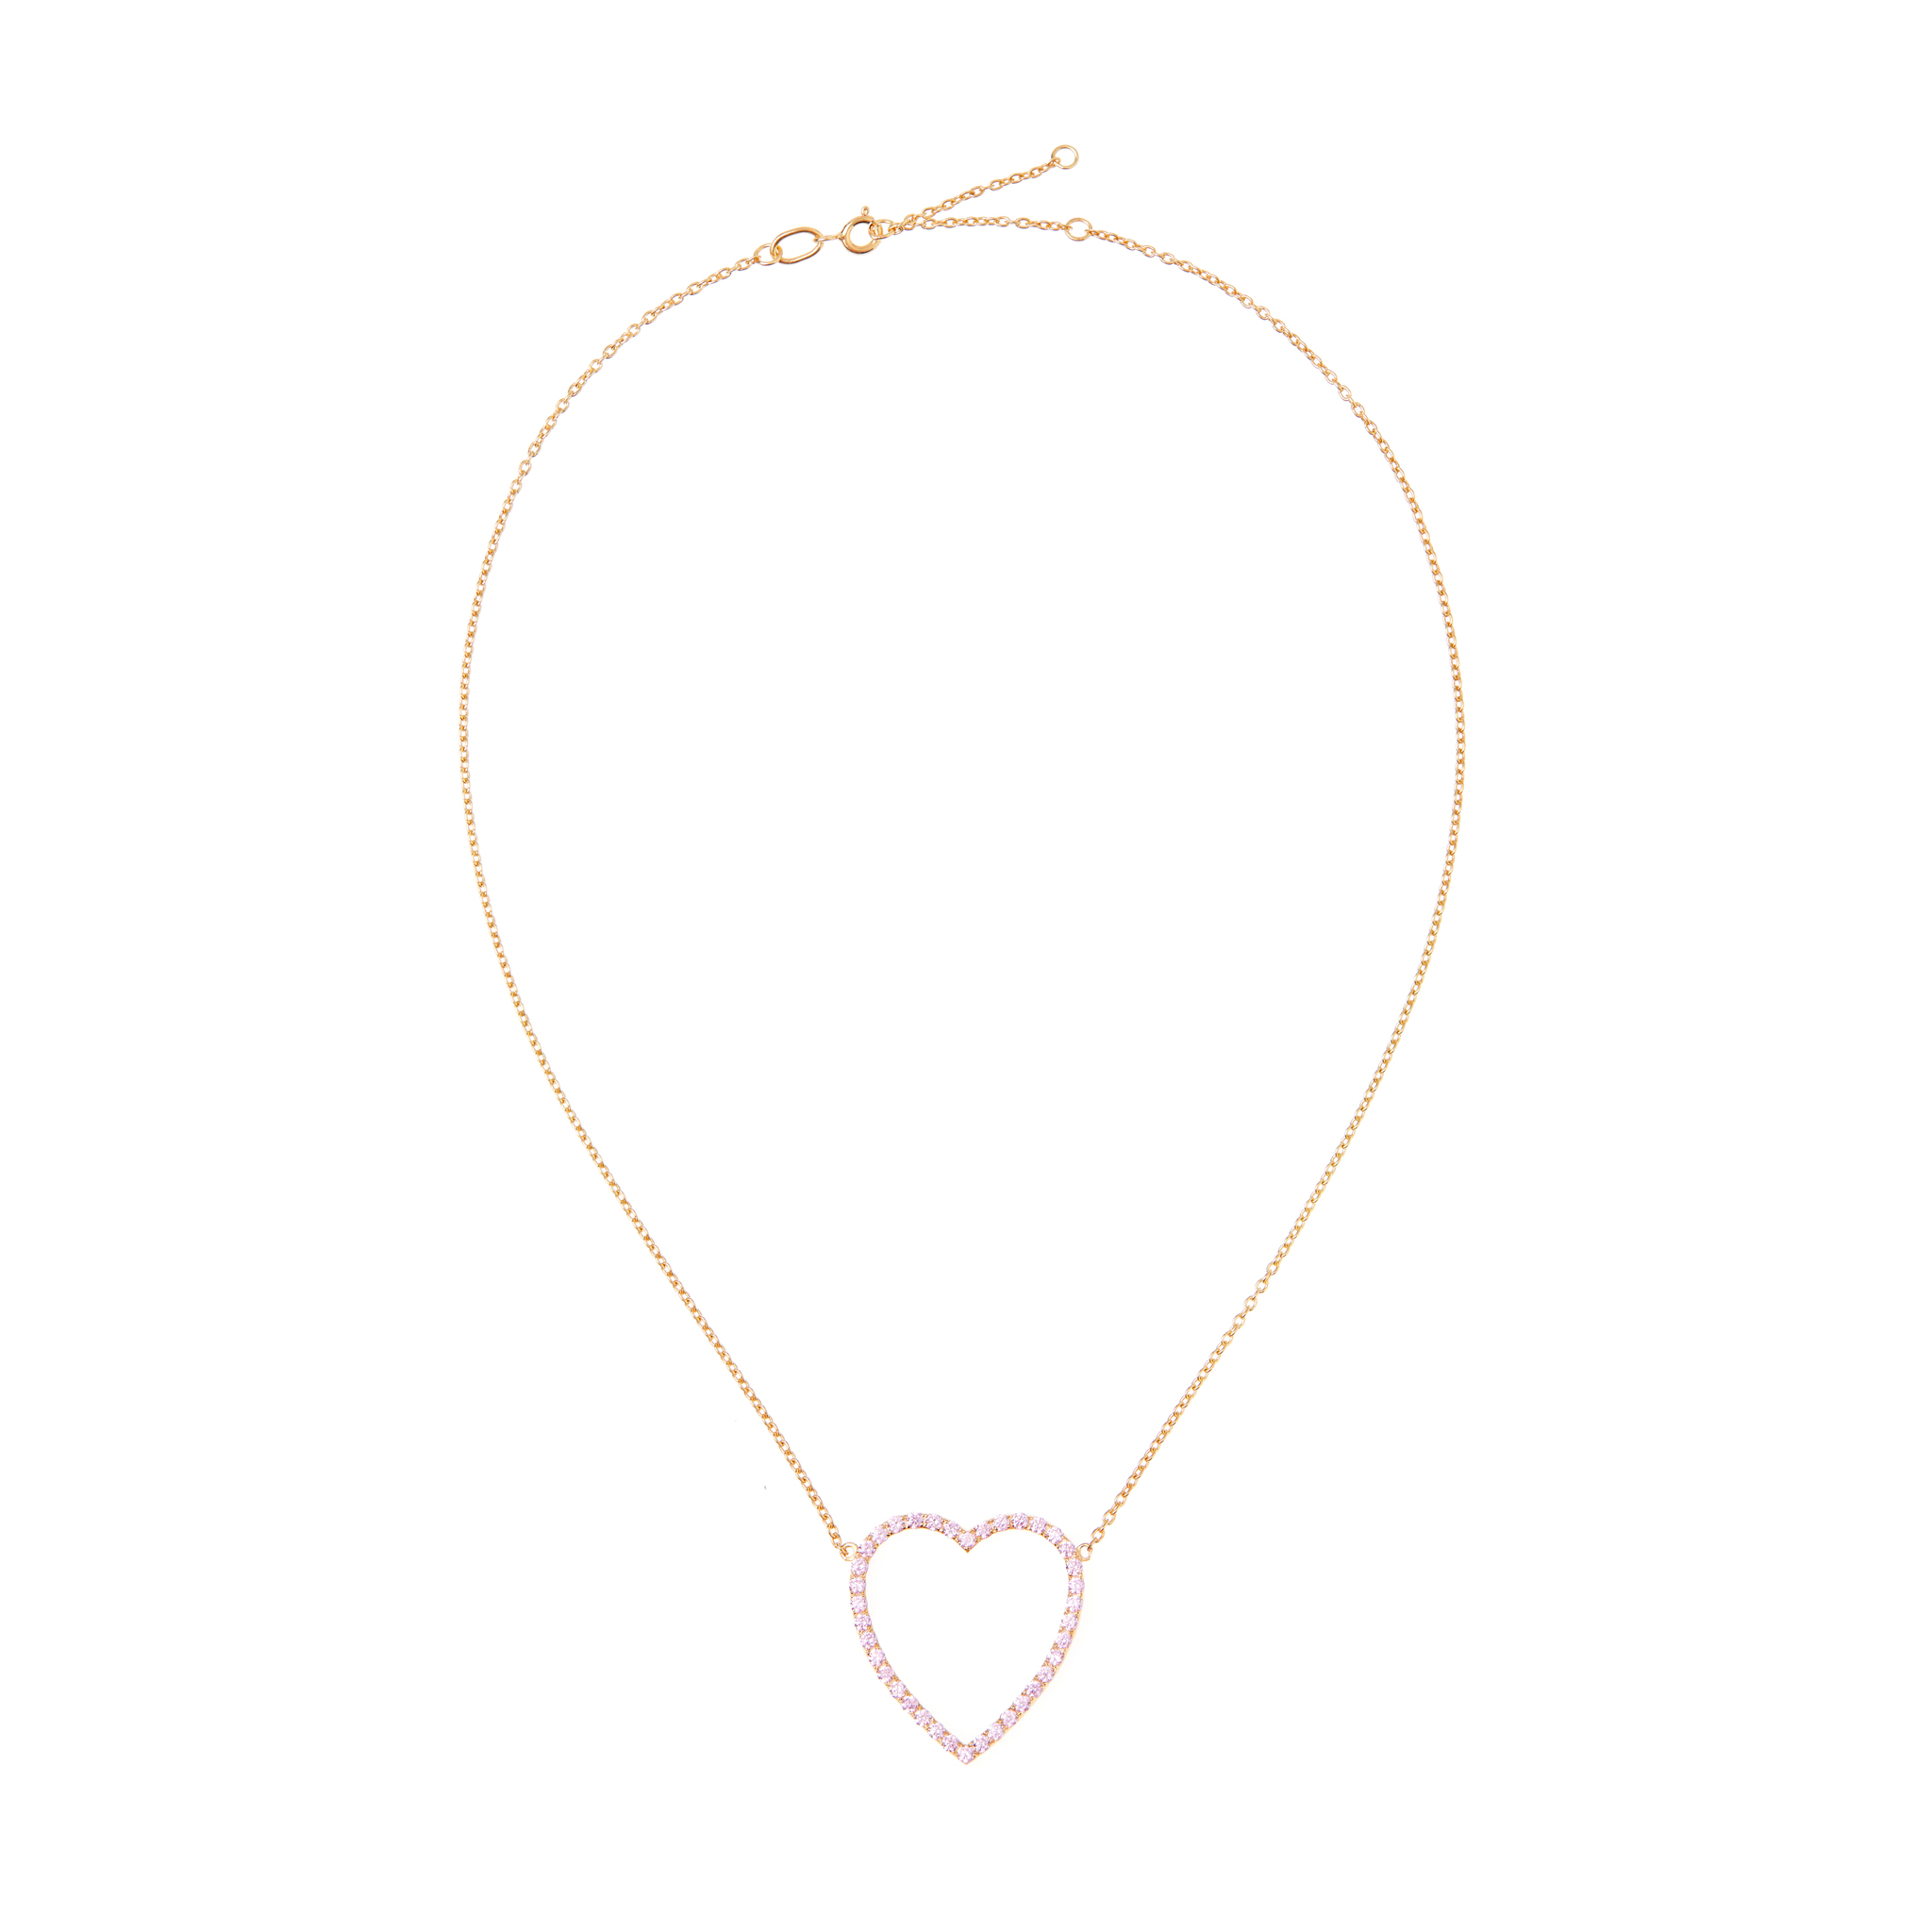 dainty heart necklace heart choker heart necklace heart jewelry small heart necklace gold heart necklace gift for mom wife VIVA LA VIKA Колье Gold Heart Necklace – Pink